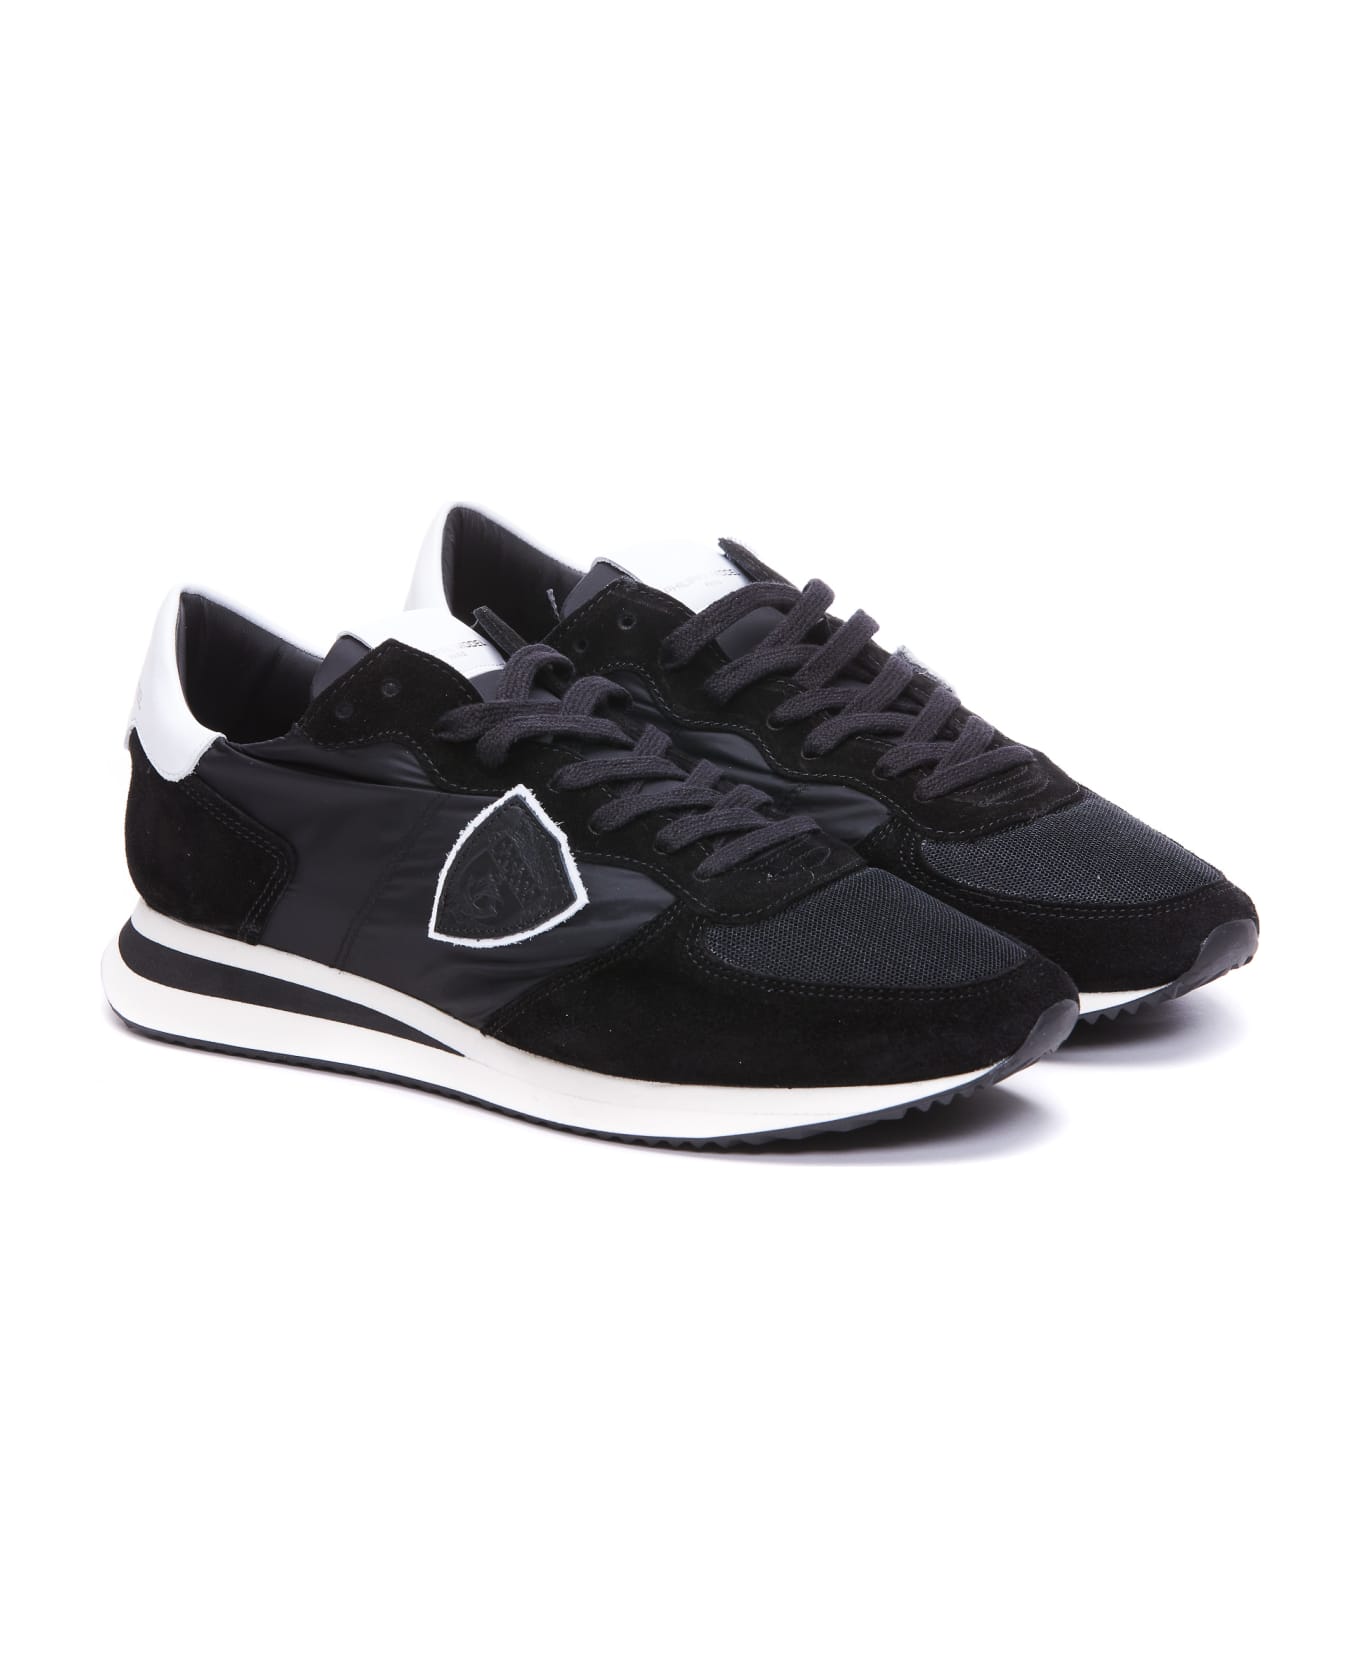 Philippe Model Trpx Sneakers - Black スニーカー